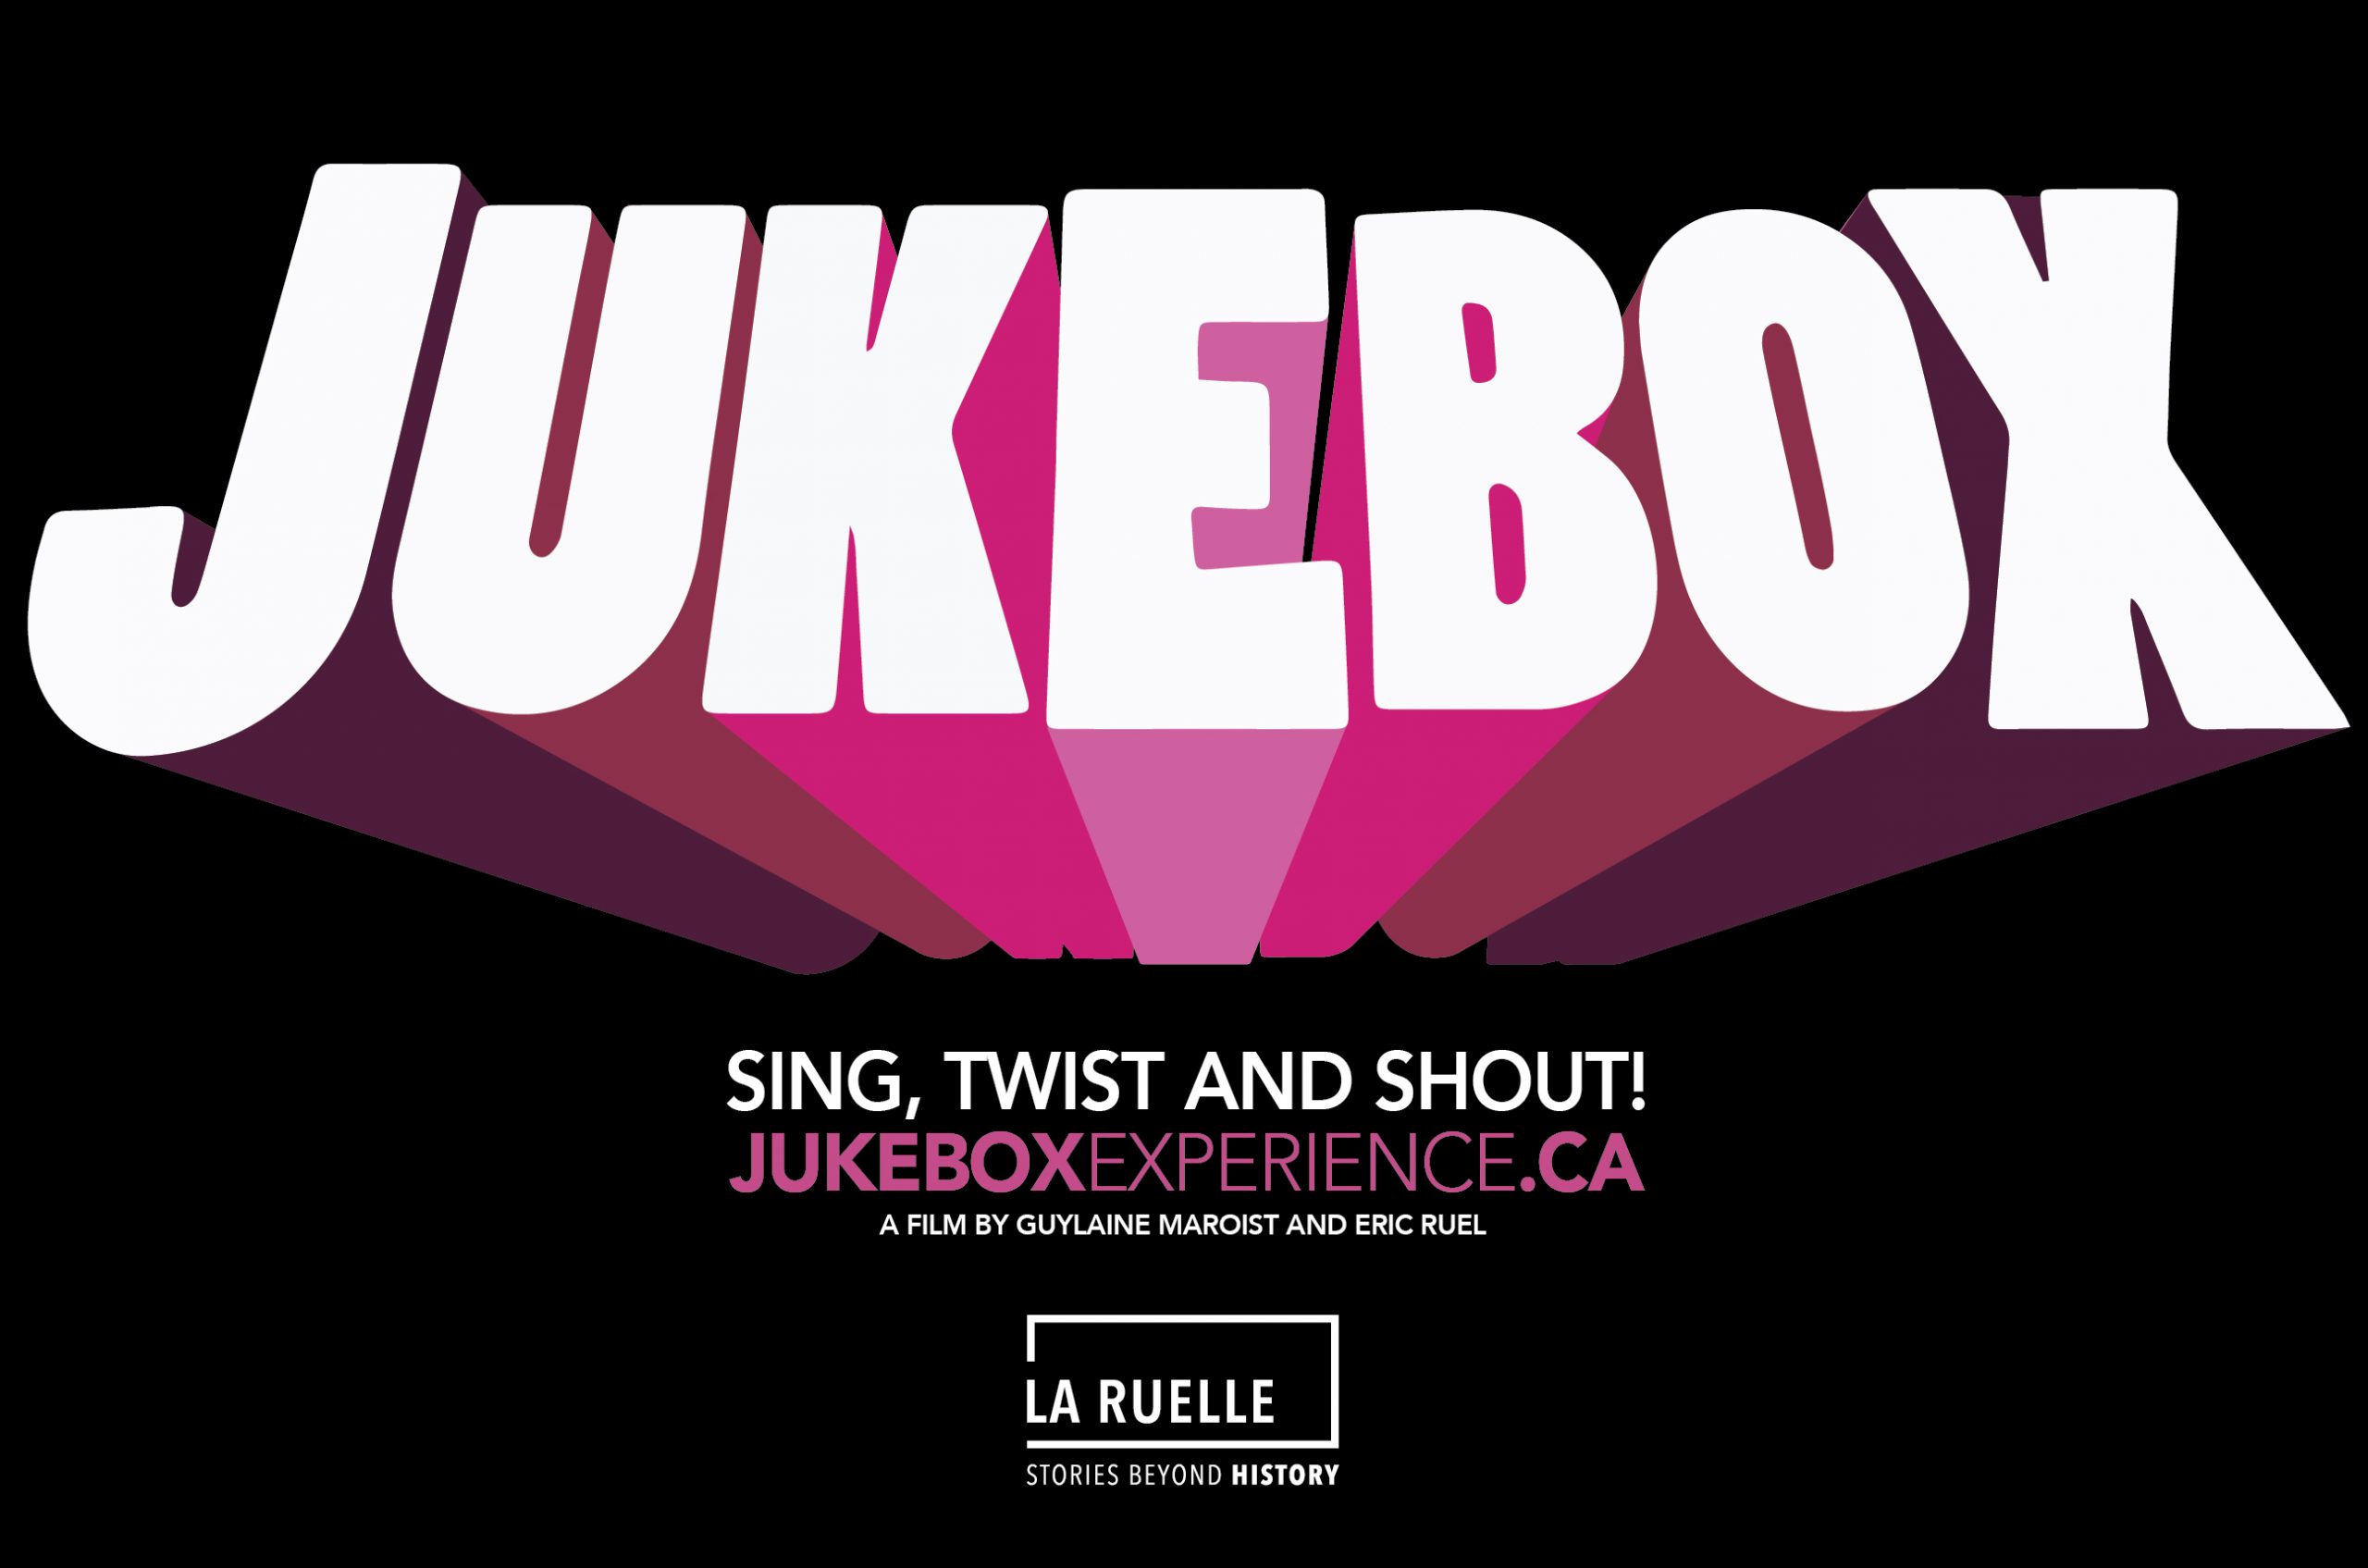 Jukebox: Sing, Twist and Shout!